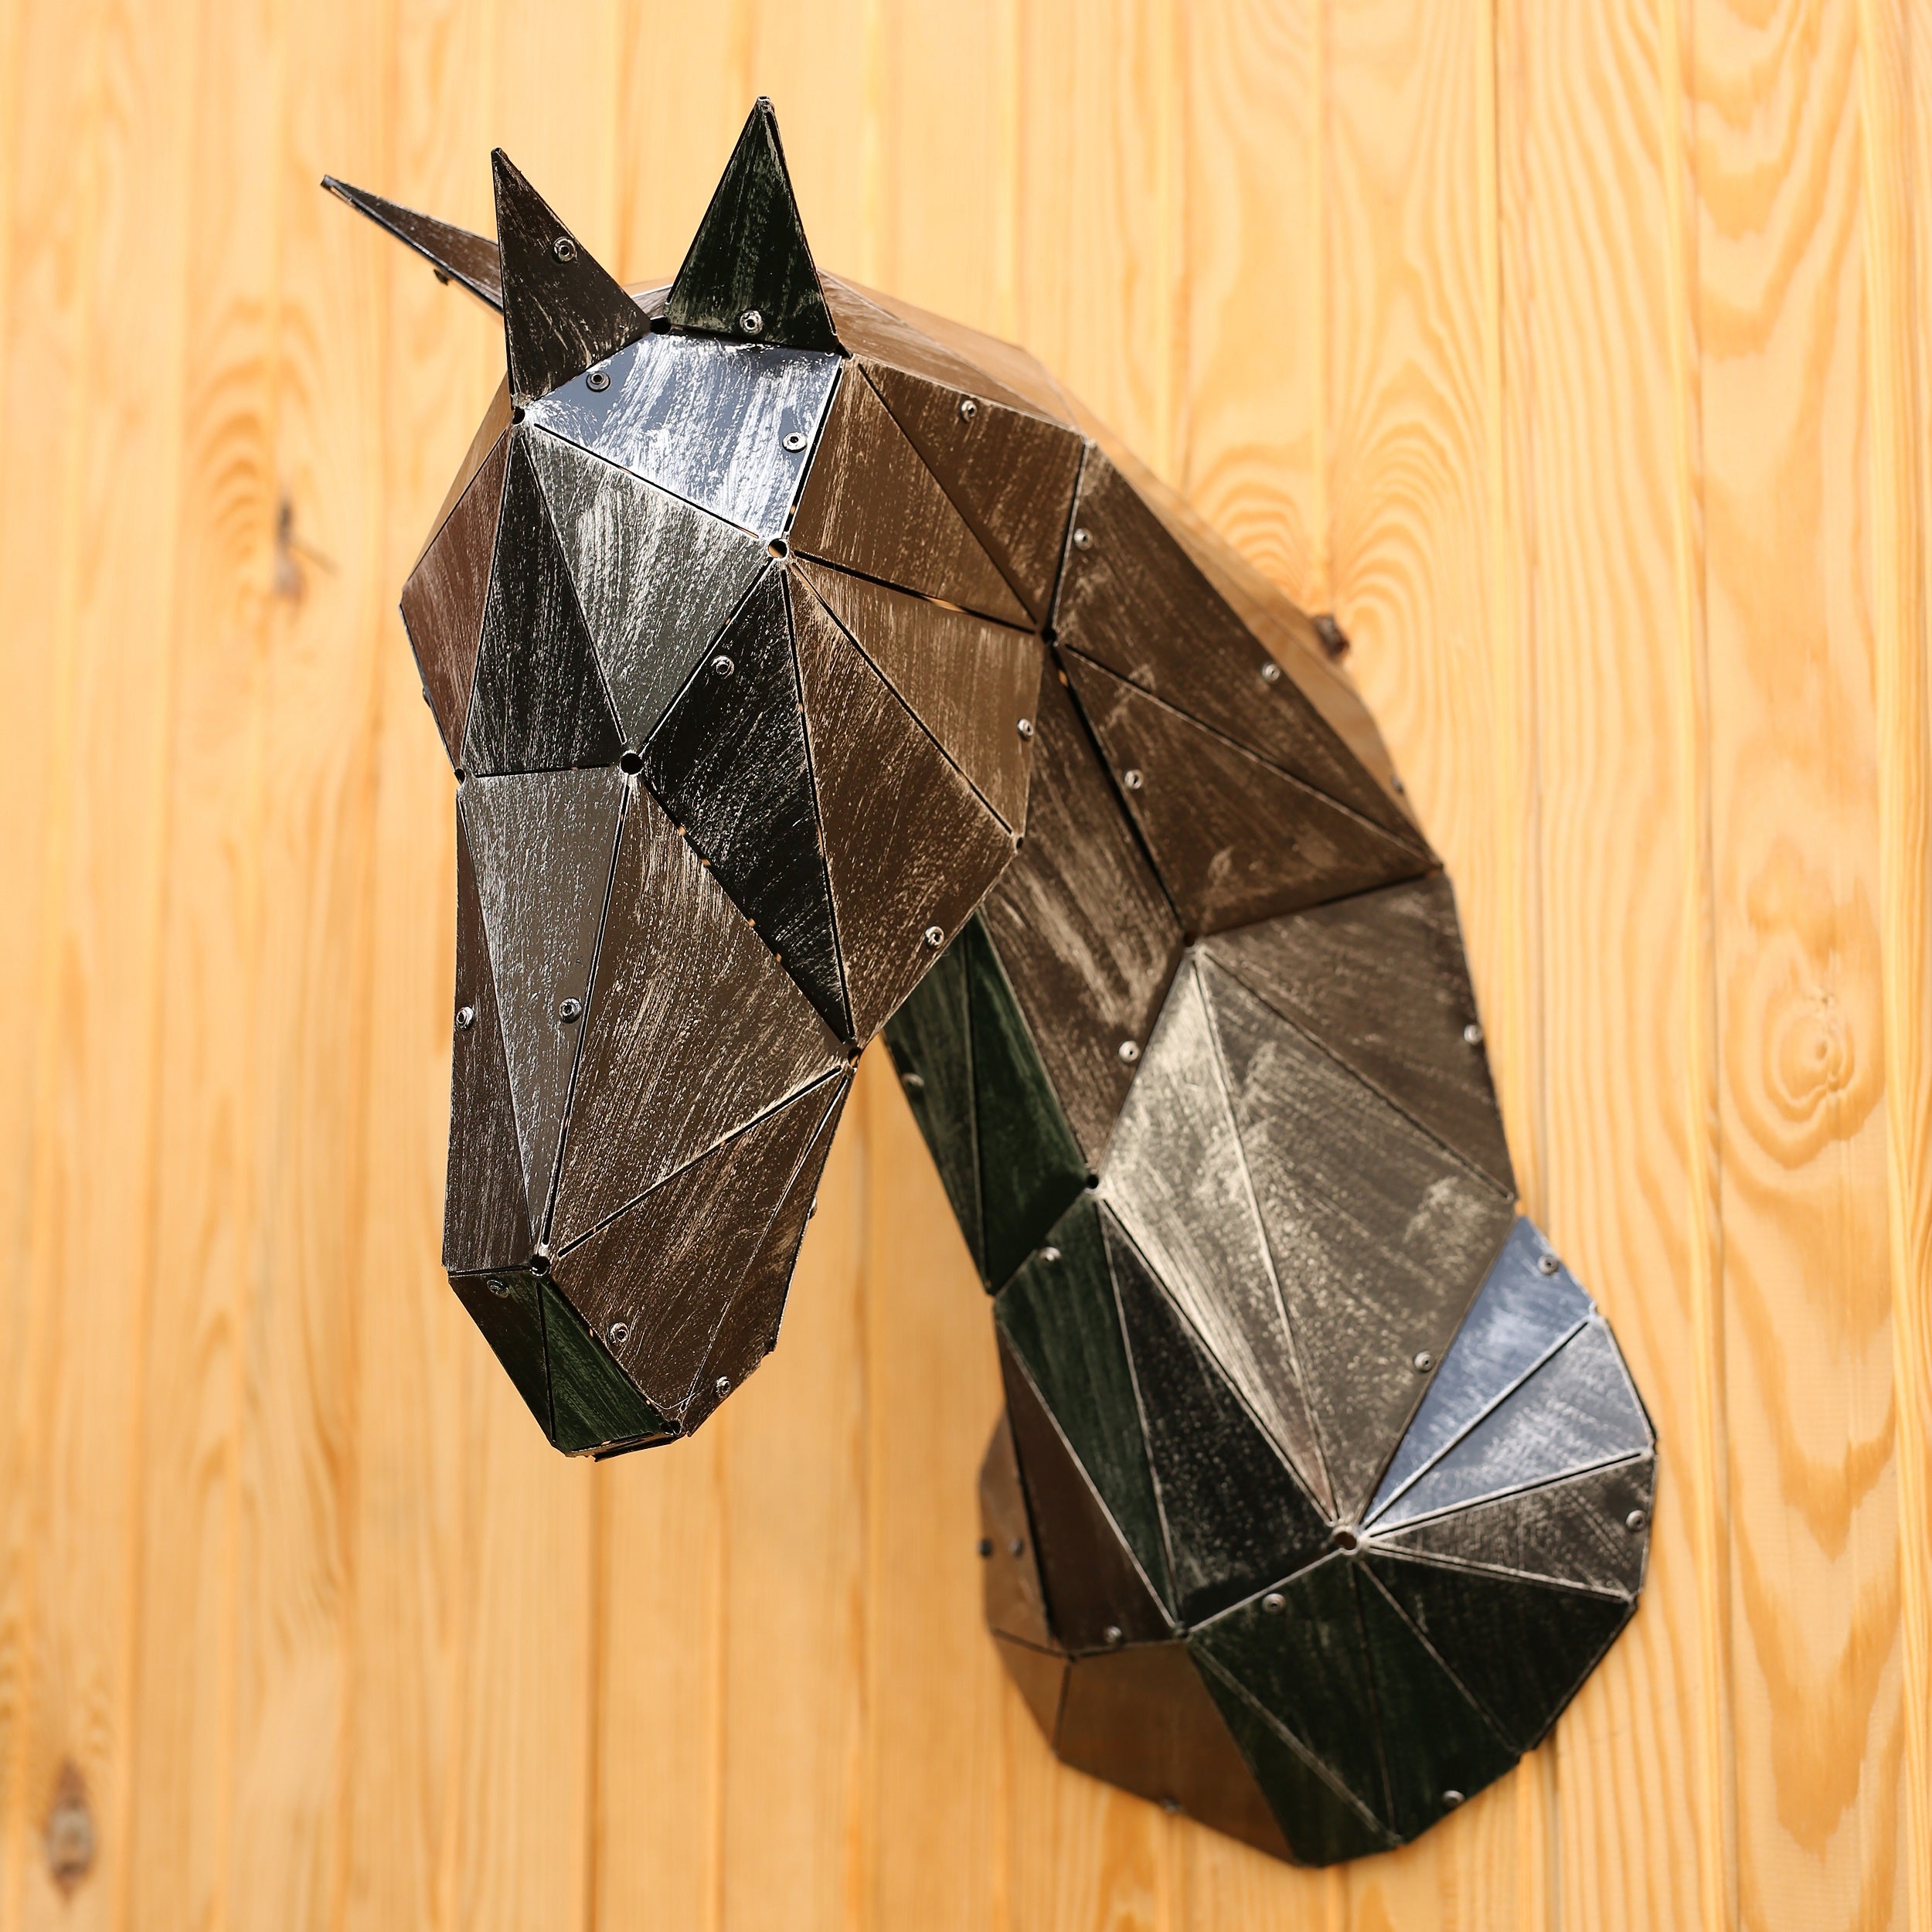 3D Geometric Wall Art of Horse